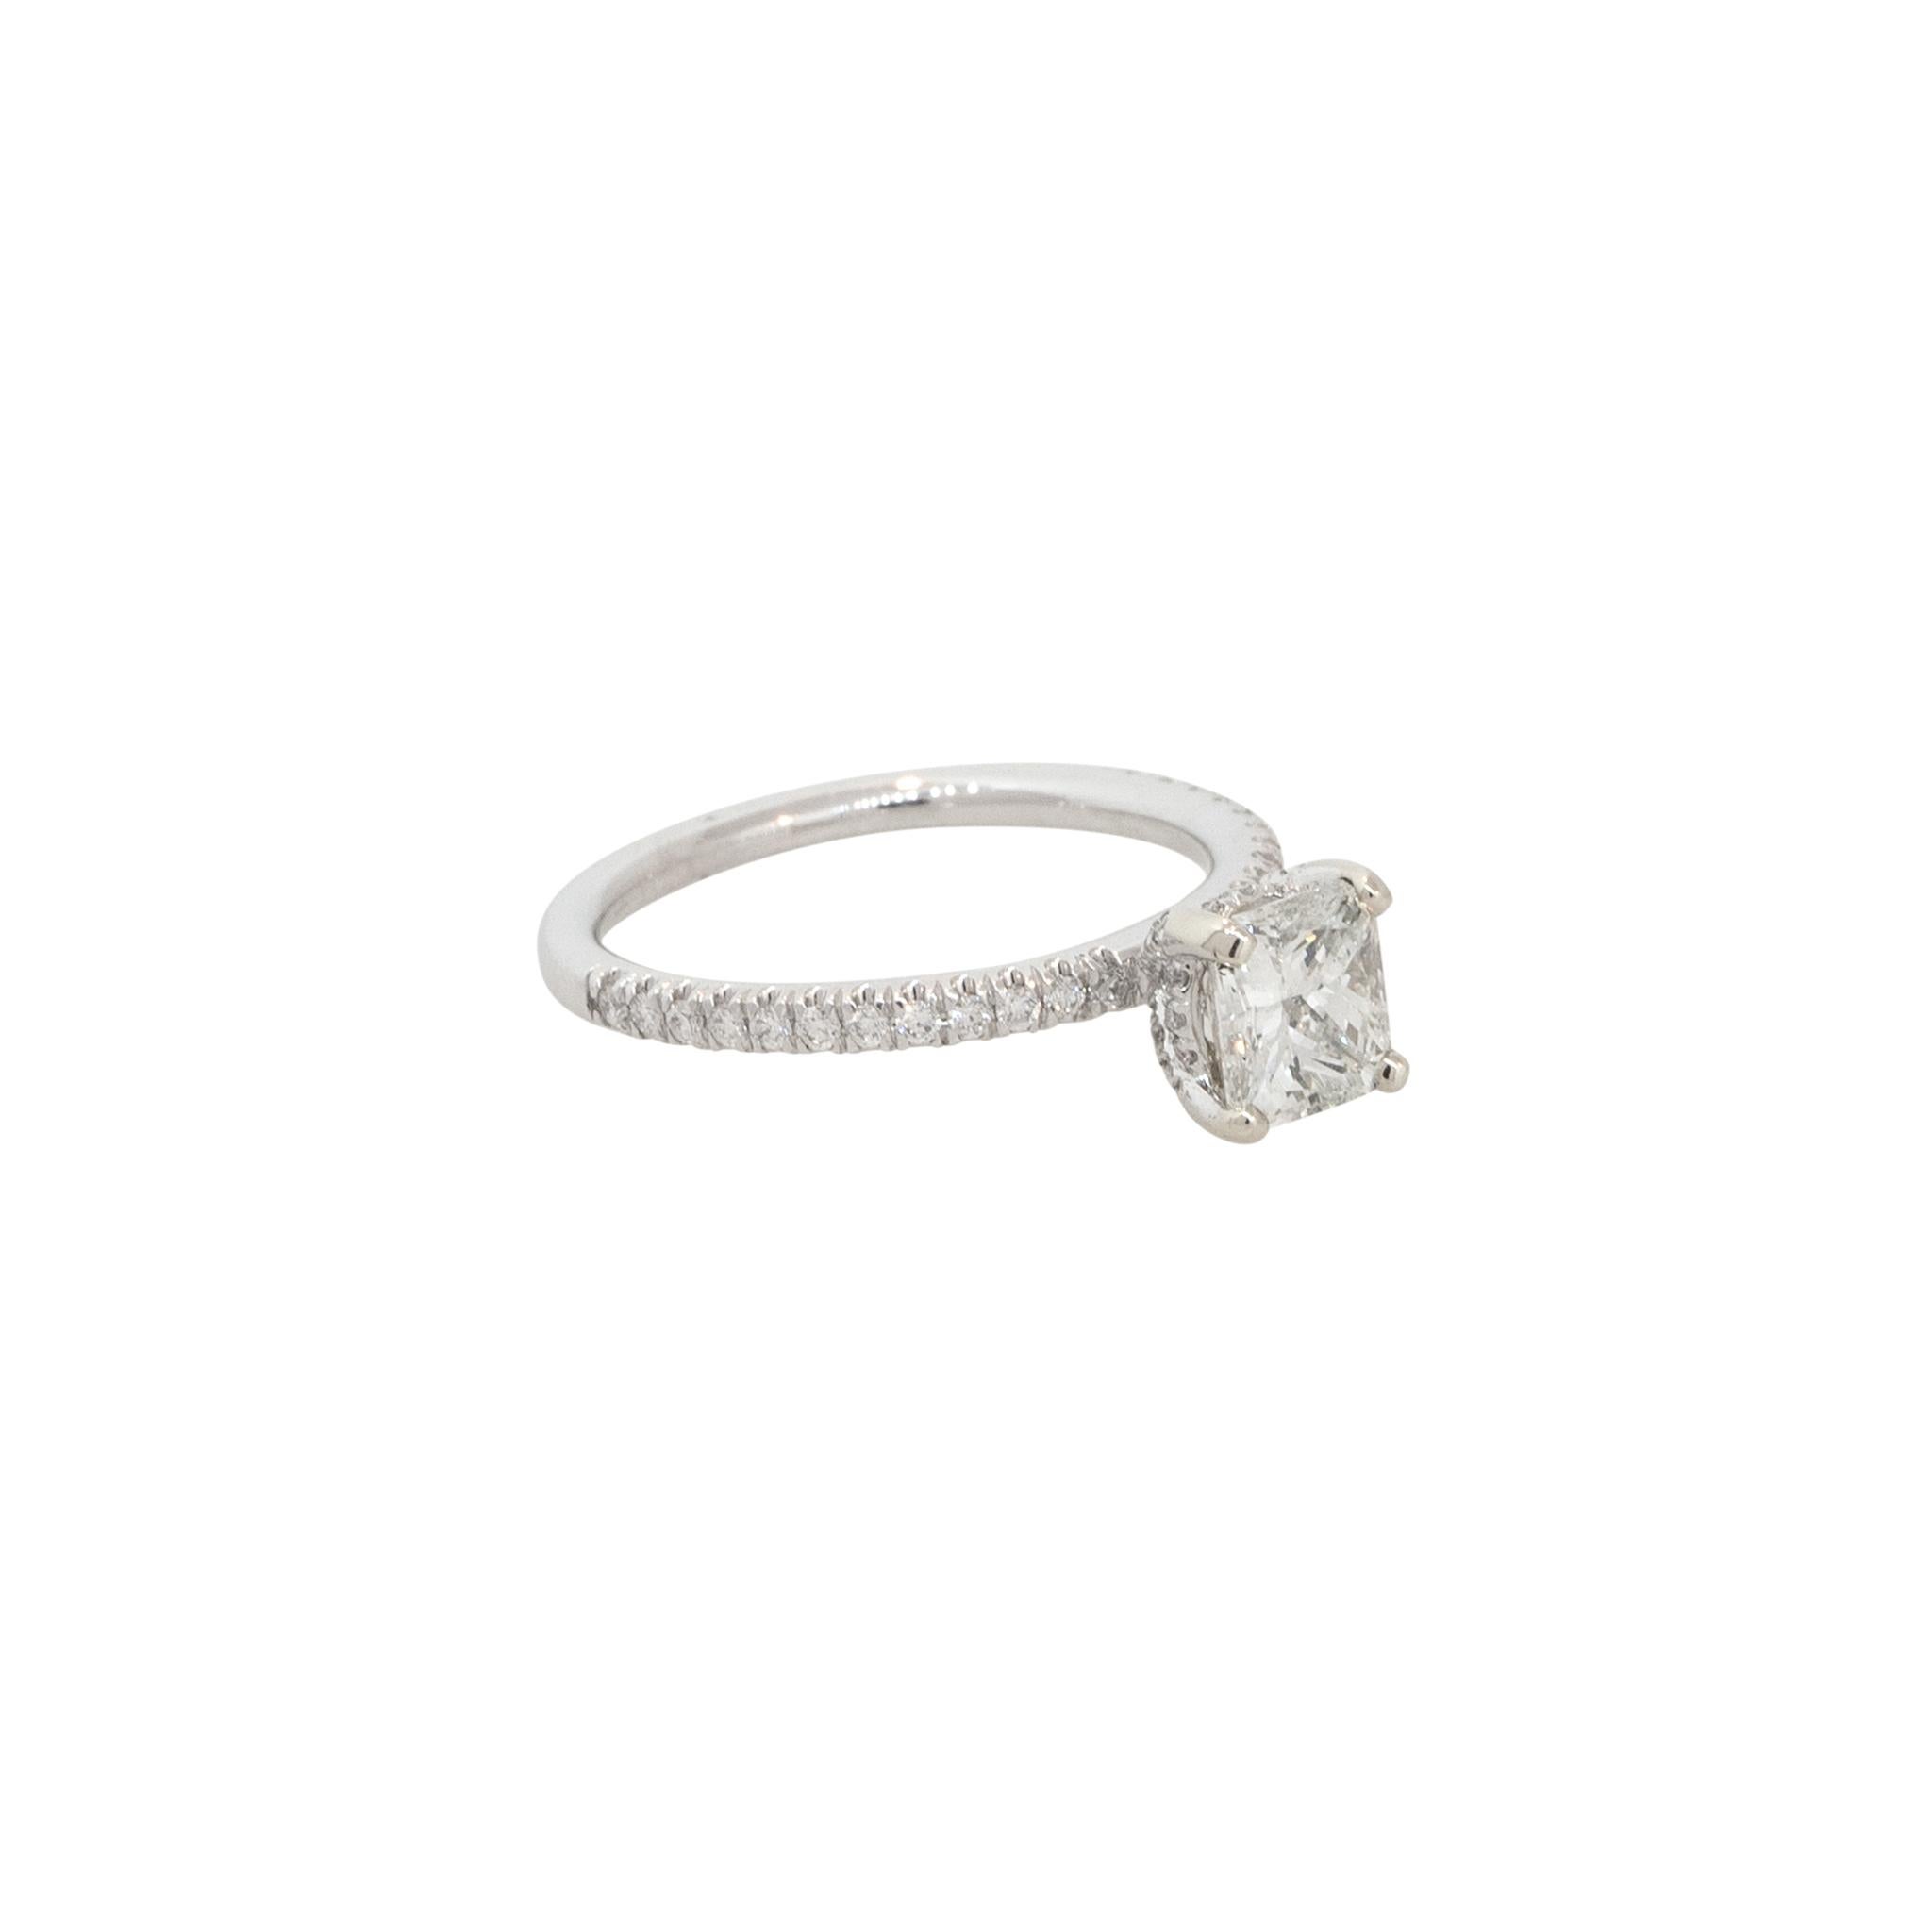 Princess Cut GIA Certified 1.32 Carat Radiant Cut Diamond Engagement Ring 14 Karat In Stock For Sale